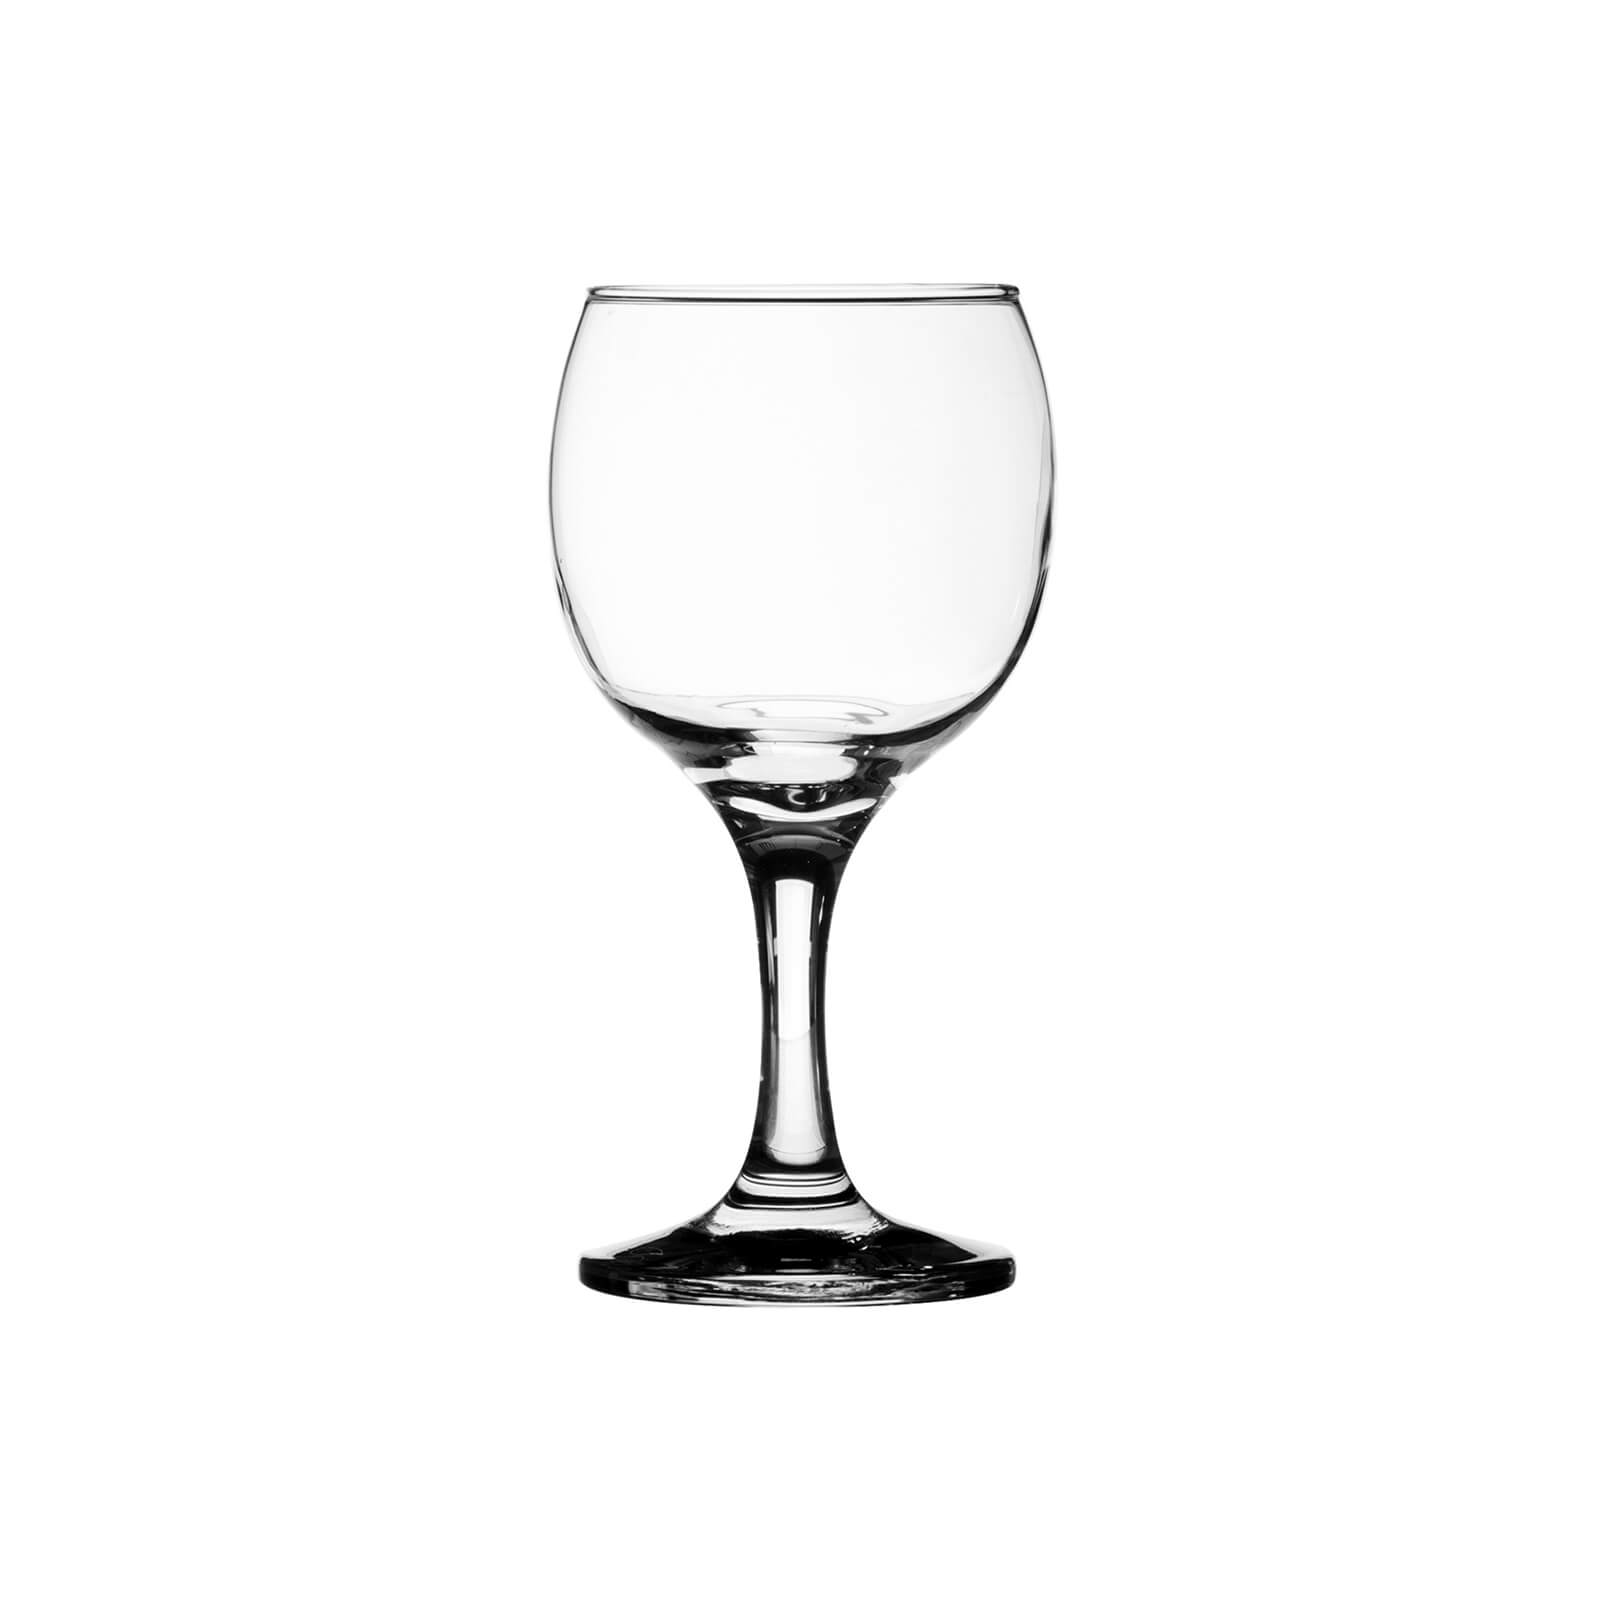 Essentials Ascot 23cl White Wine Glasses - Set of 6